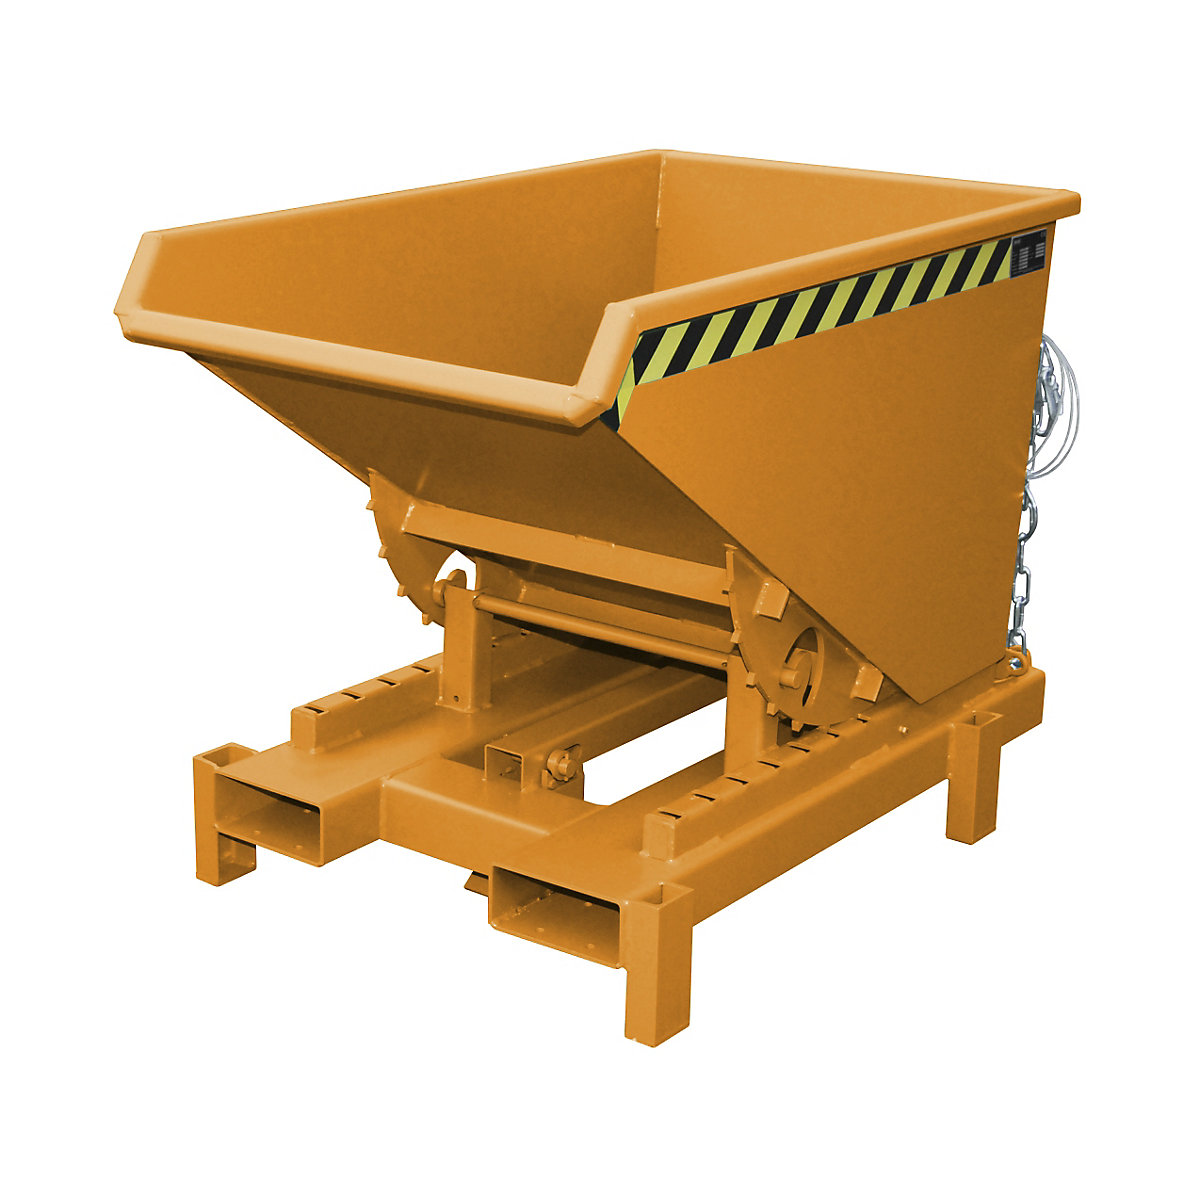 Heavy duty tilting skip – eurokraft pro, capacity 0.3 m³, max. load 4000 kg, orange RAL 2000-9